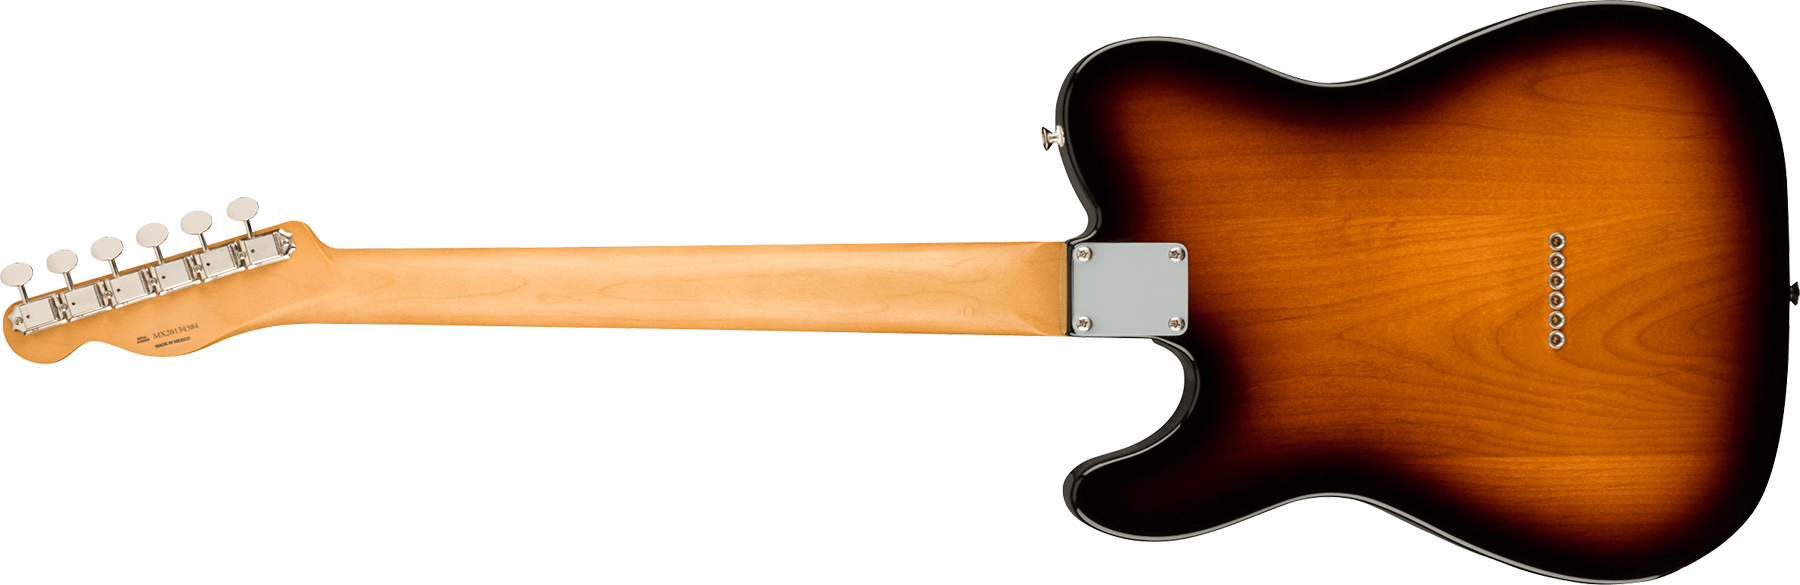 Fender Tele Noventa Mex Pf +housse - 2-color Sunburst - Guitarra eléctrica con forma de tel - Variation 1